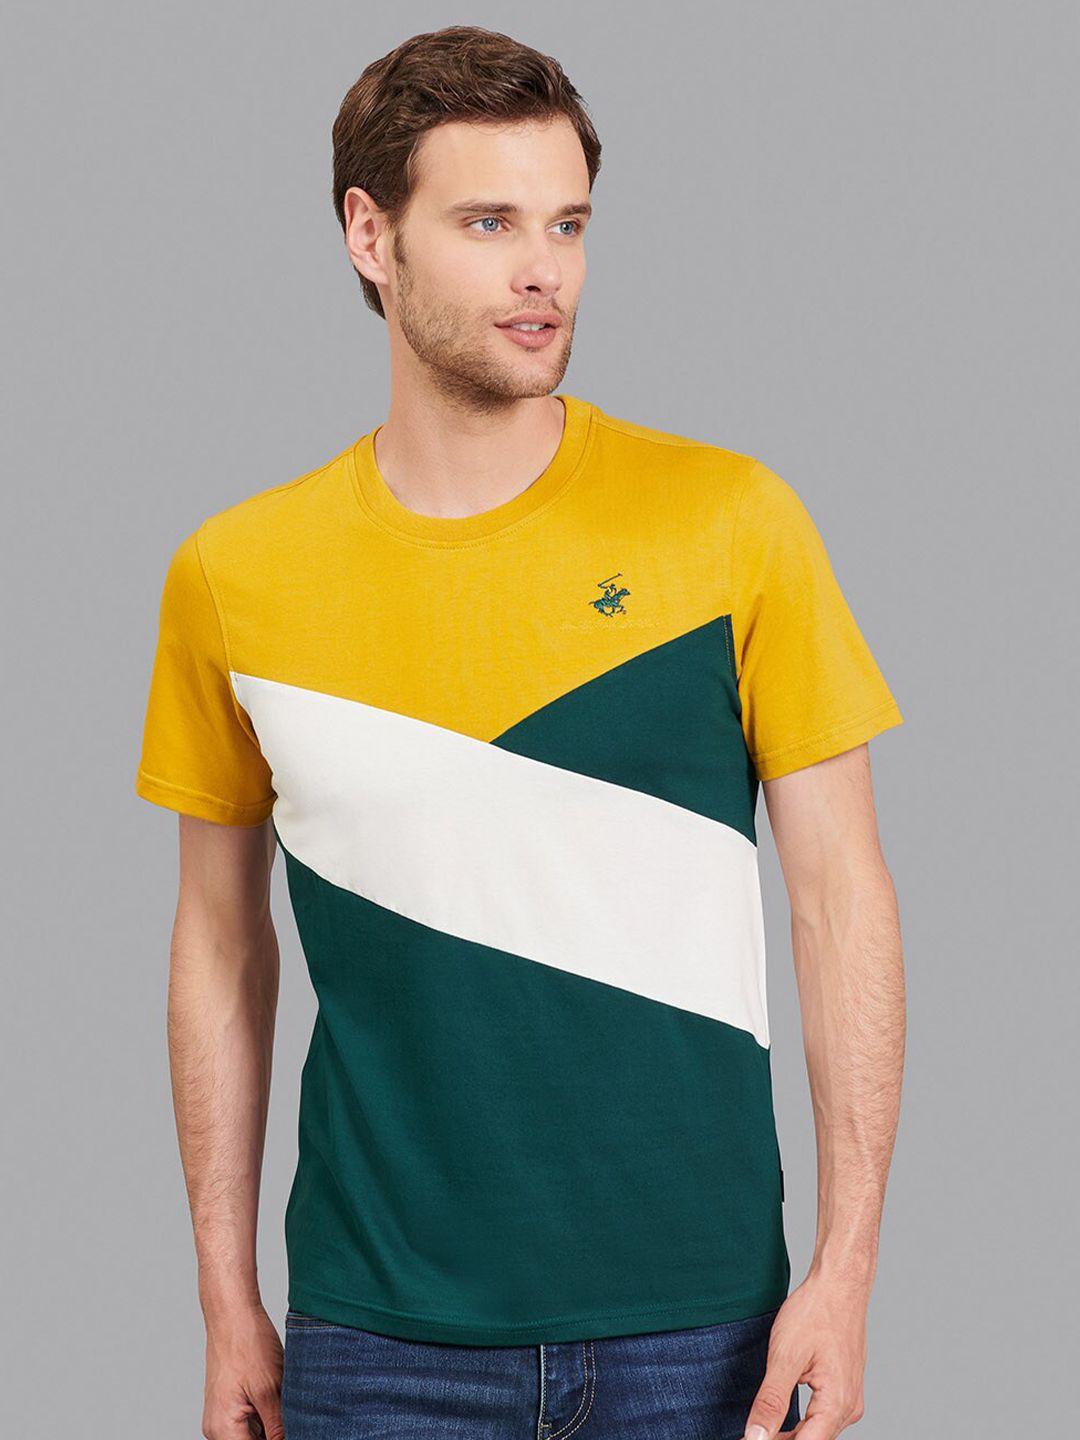 beverly hills polo club men yellow & green colourblocked t-shirt